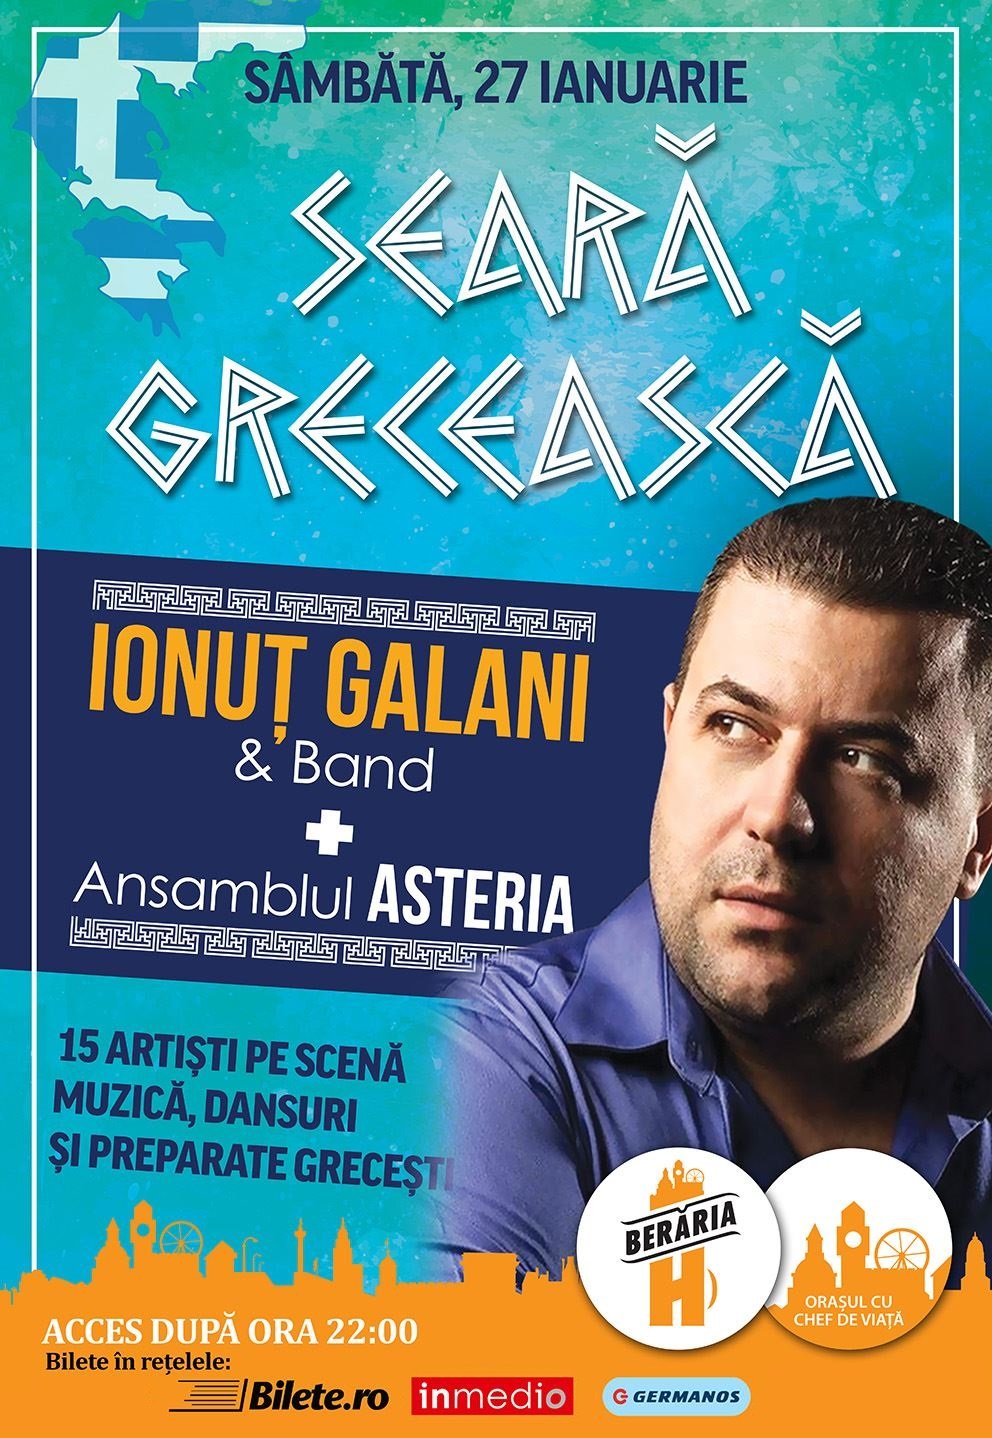 bilete Seara Greceasca: Ionut Galani & Band + Ansamblul Asteria